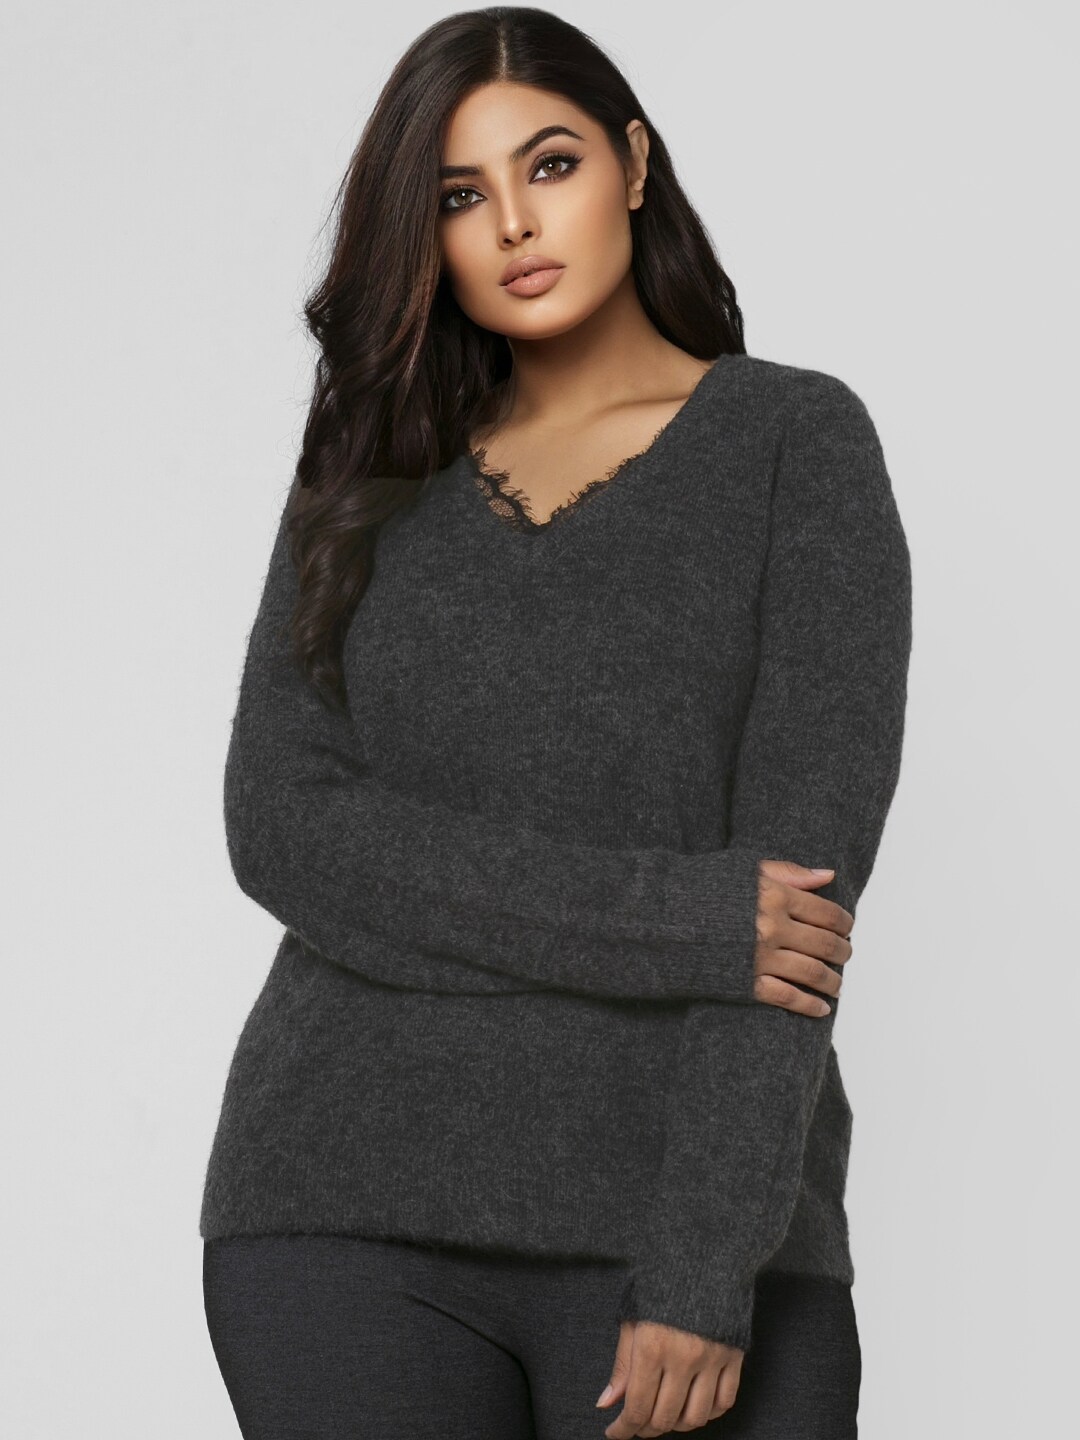 Vero Moda Women Charcoal Grey Solid Fleeced Pullover Sweater Price in India